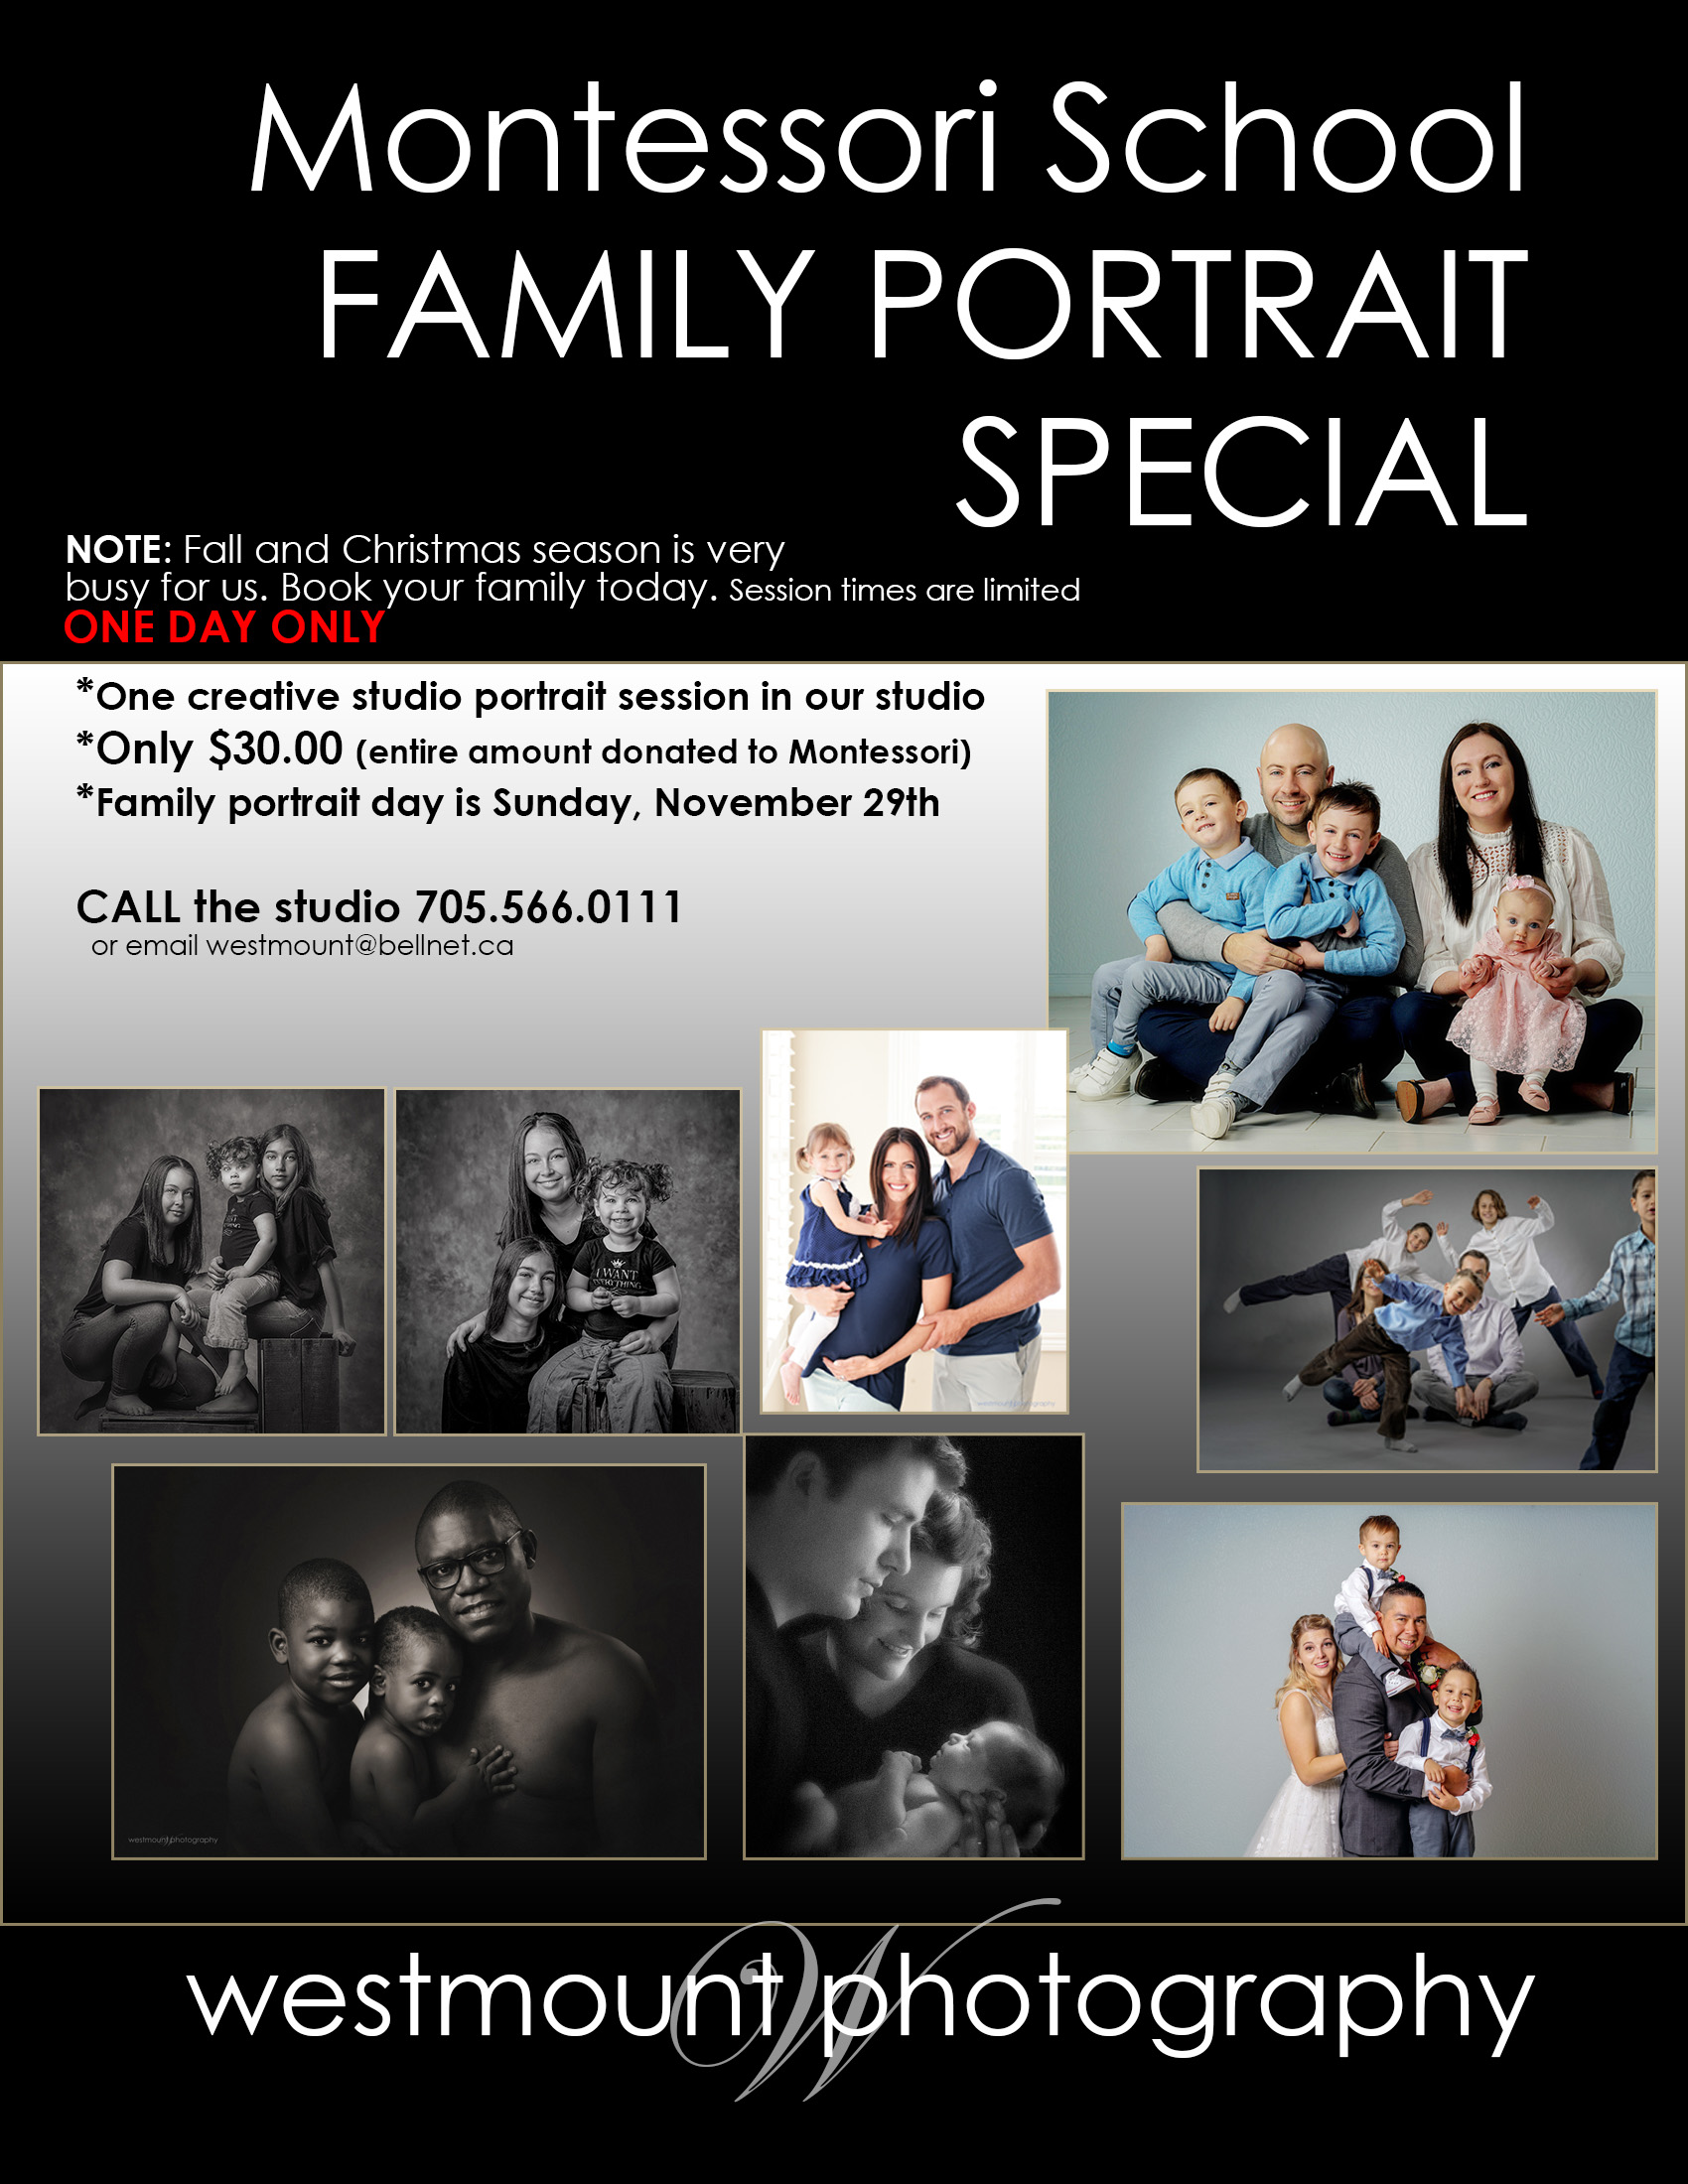 Montessori Family Portrait Fundraiser day- Sunday, November 29,2020